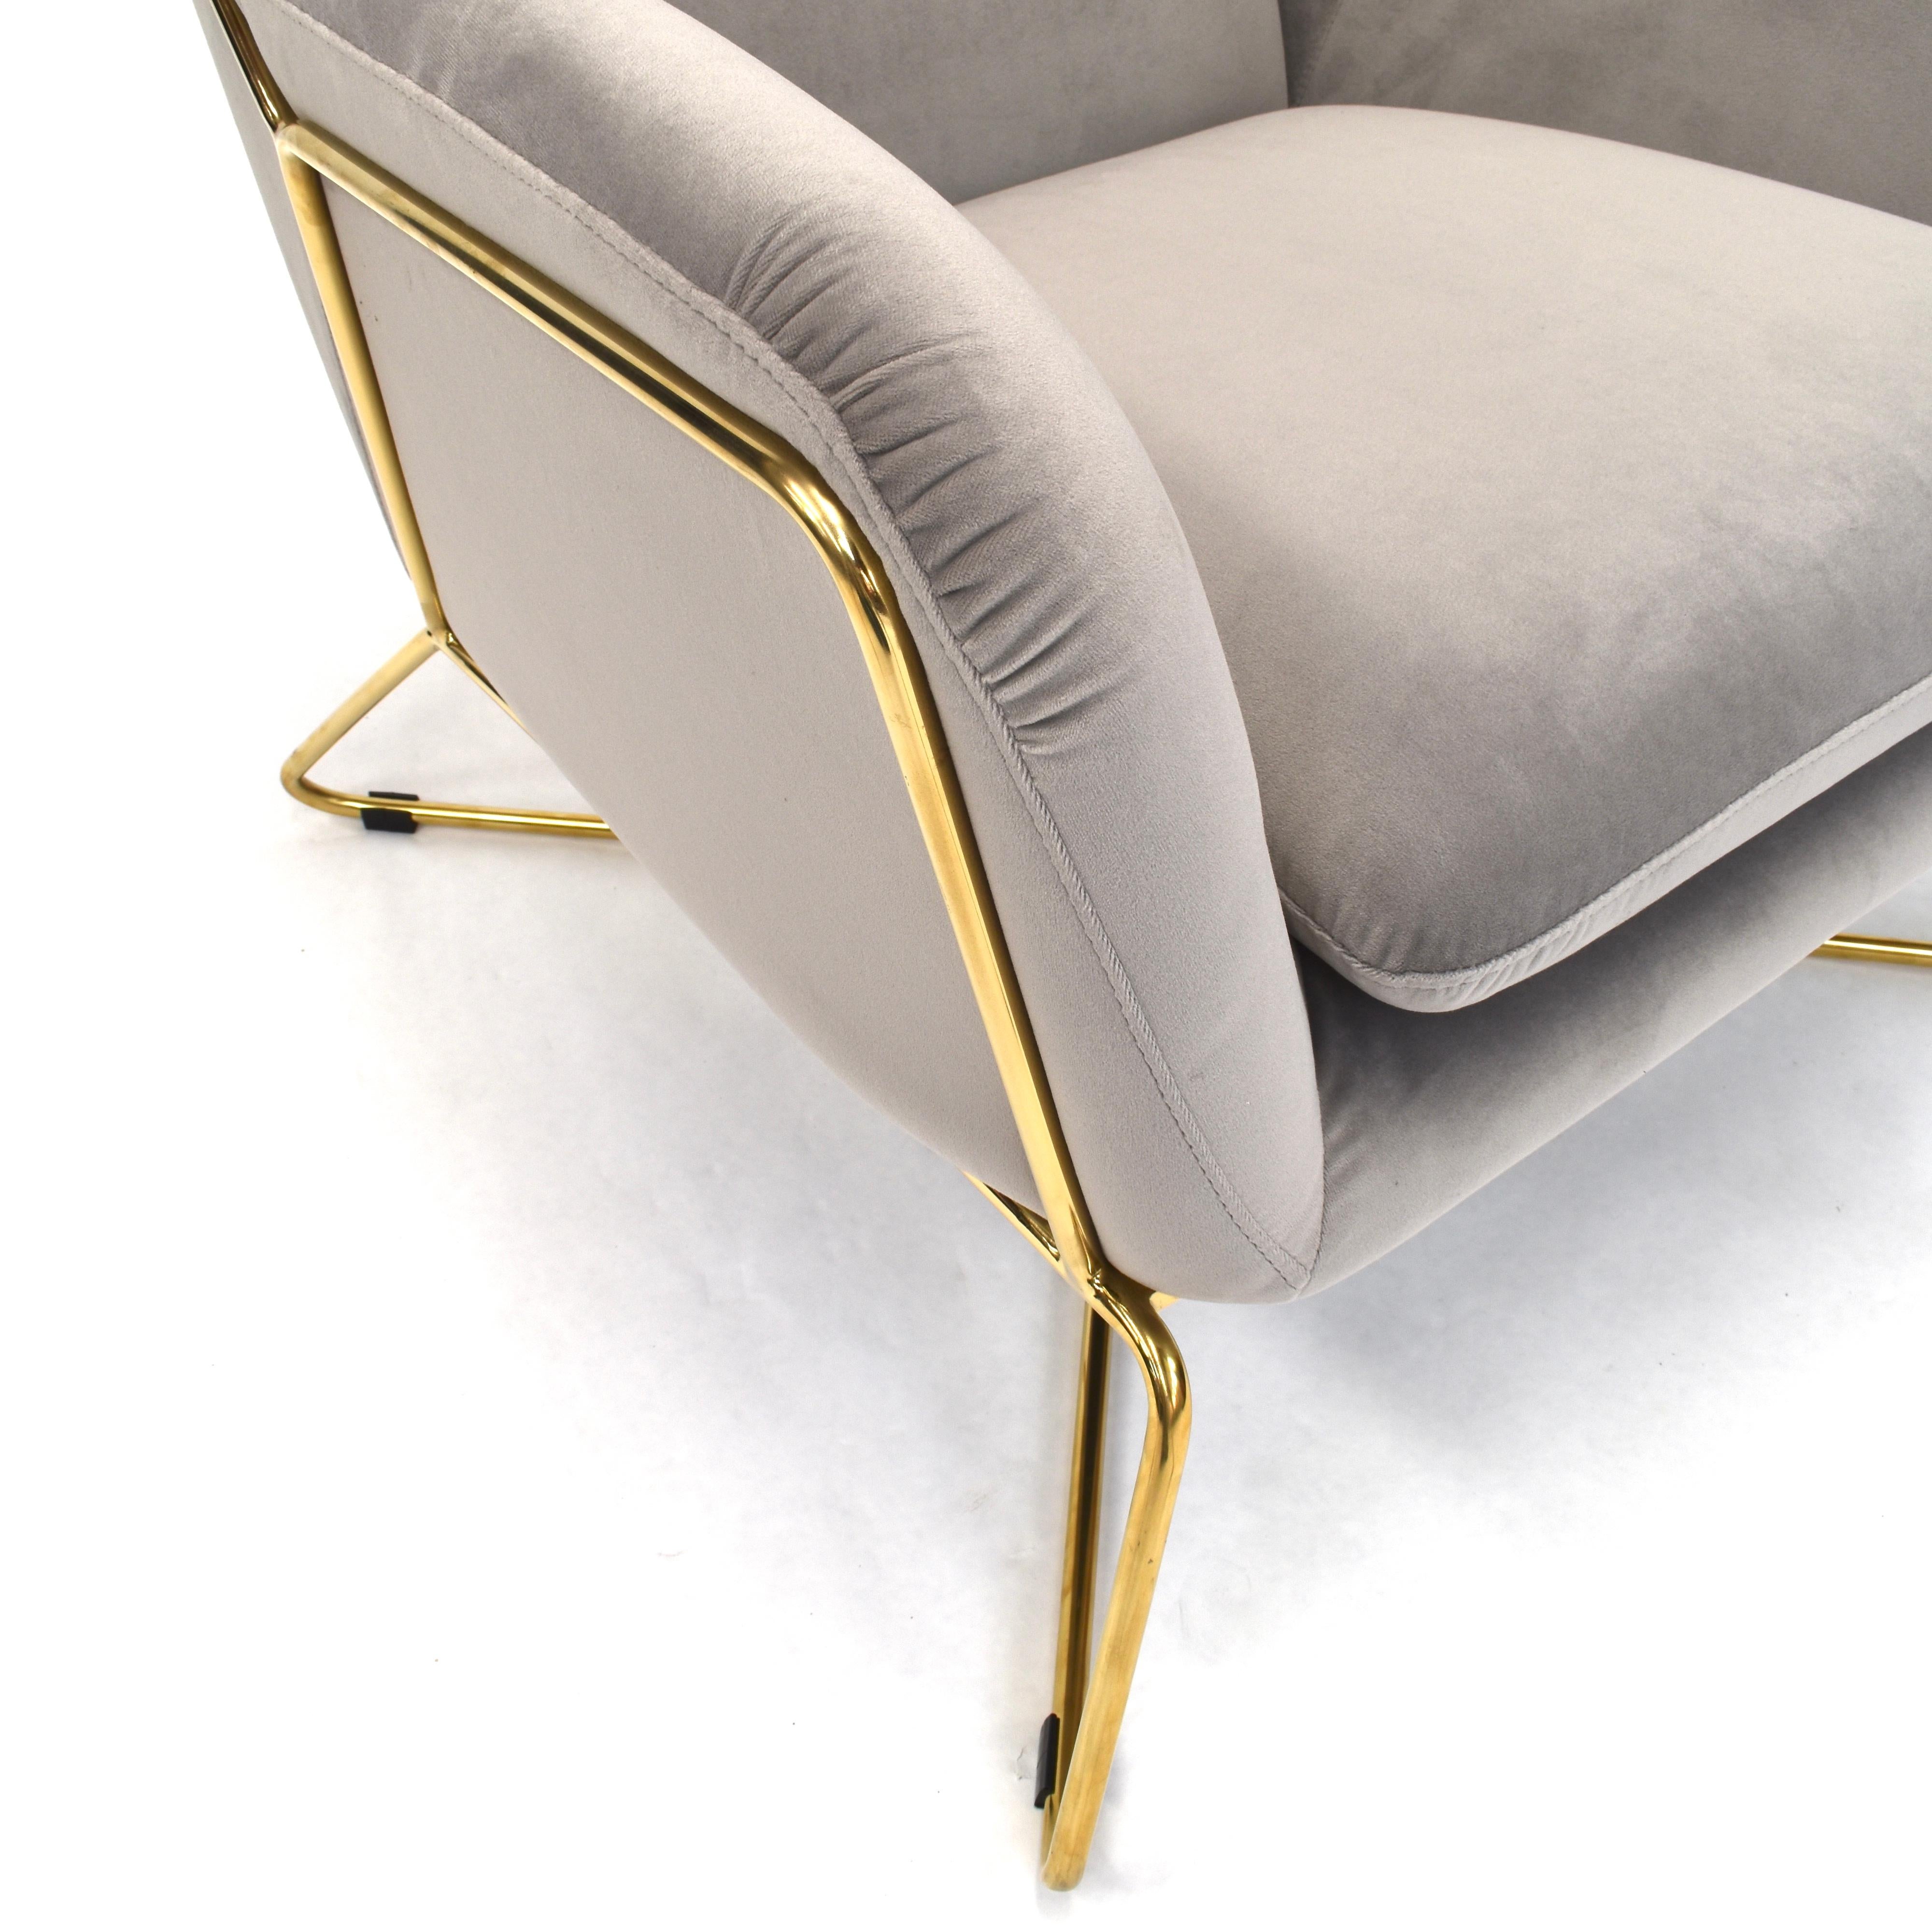 Contemporary Elegant SOHO Lounge Chair in Velvet and Gold, 21st Century For Sale